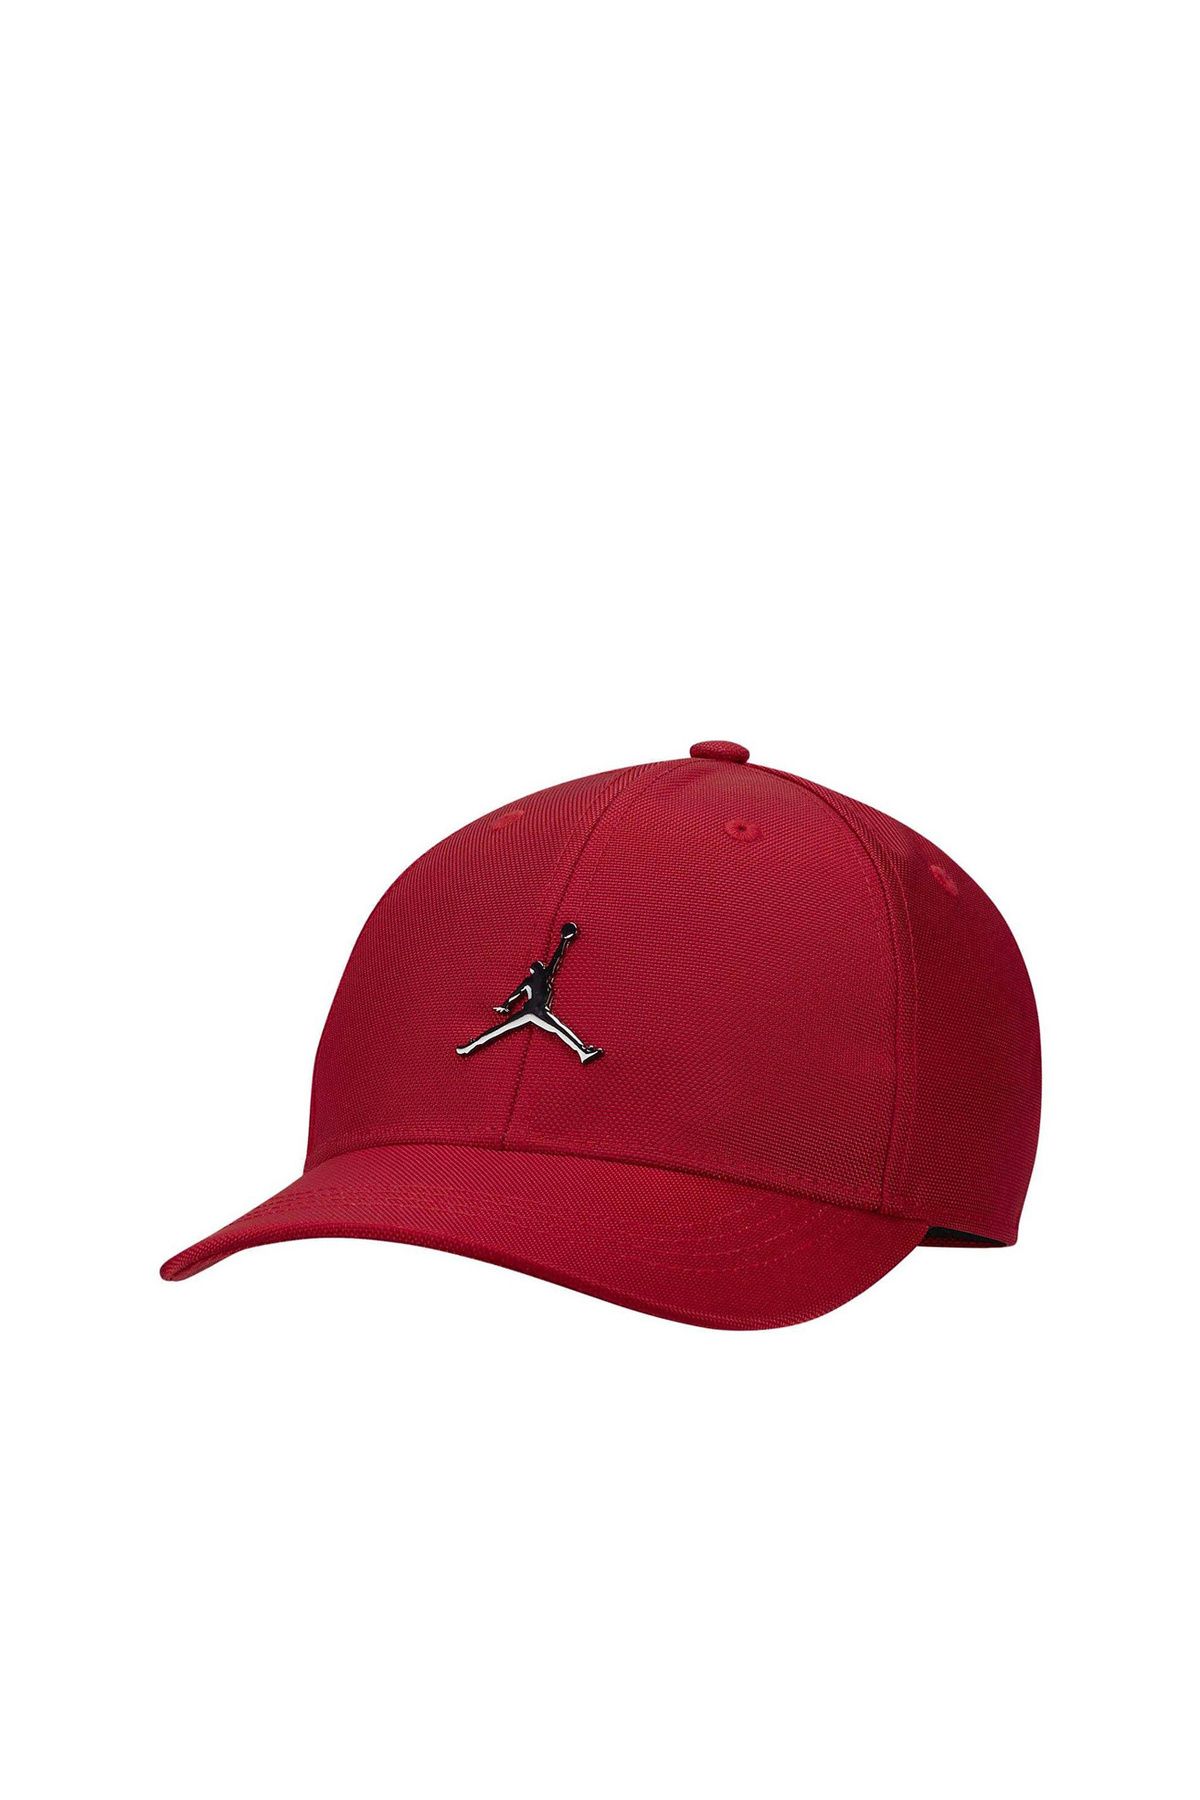 Nike Çocuk Kırmızı Şapka 9A0823-R78 JAN METAL JUMPMAN CURVE